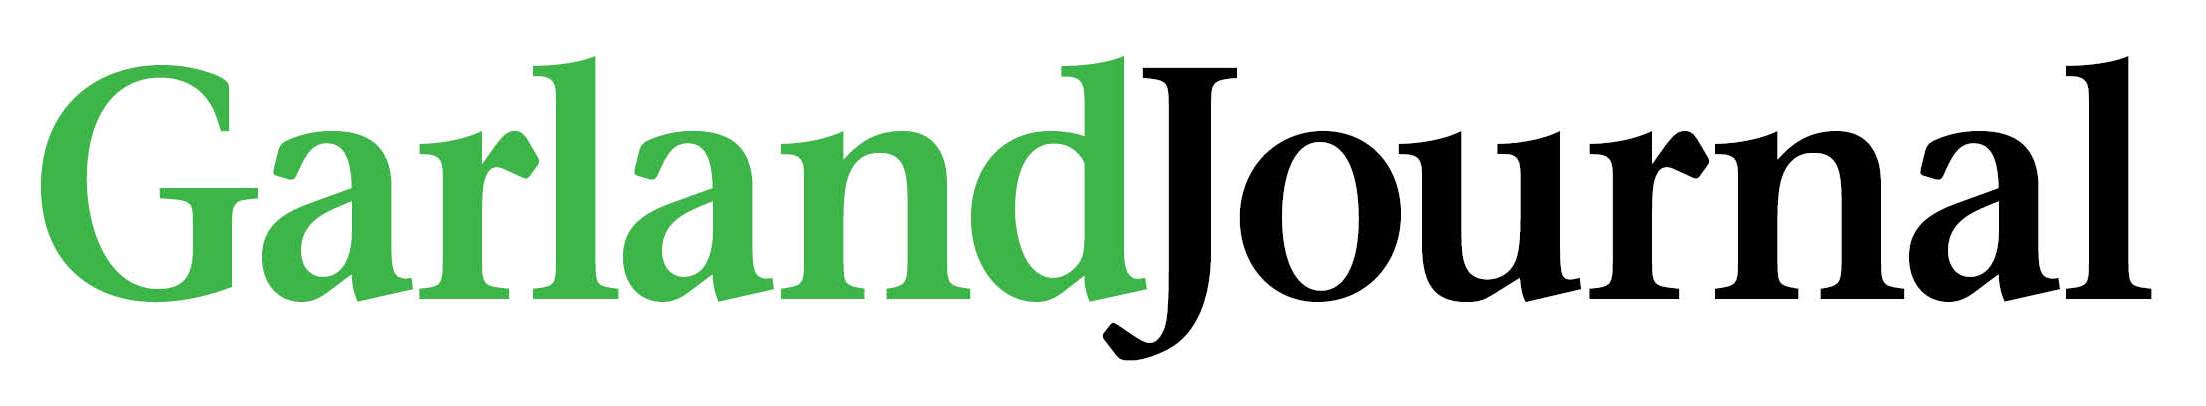 Garland Journal - Logo